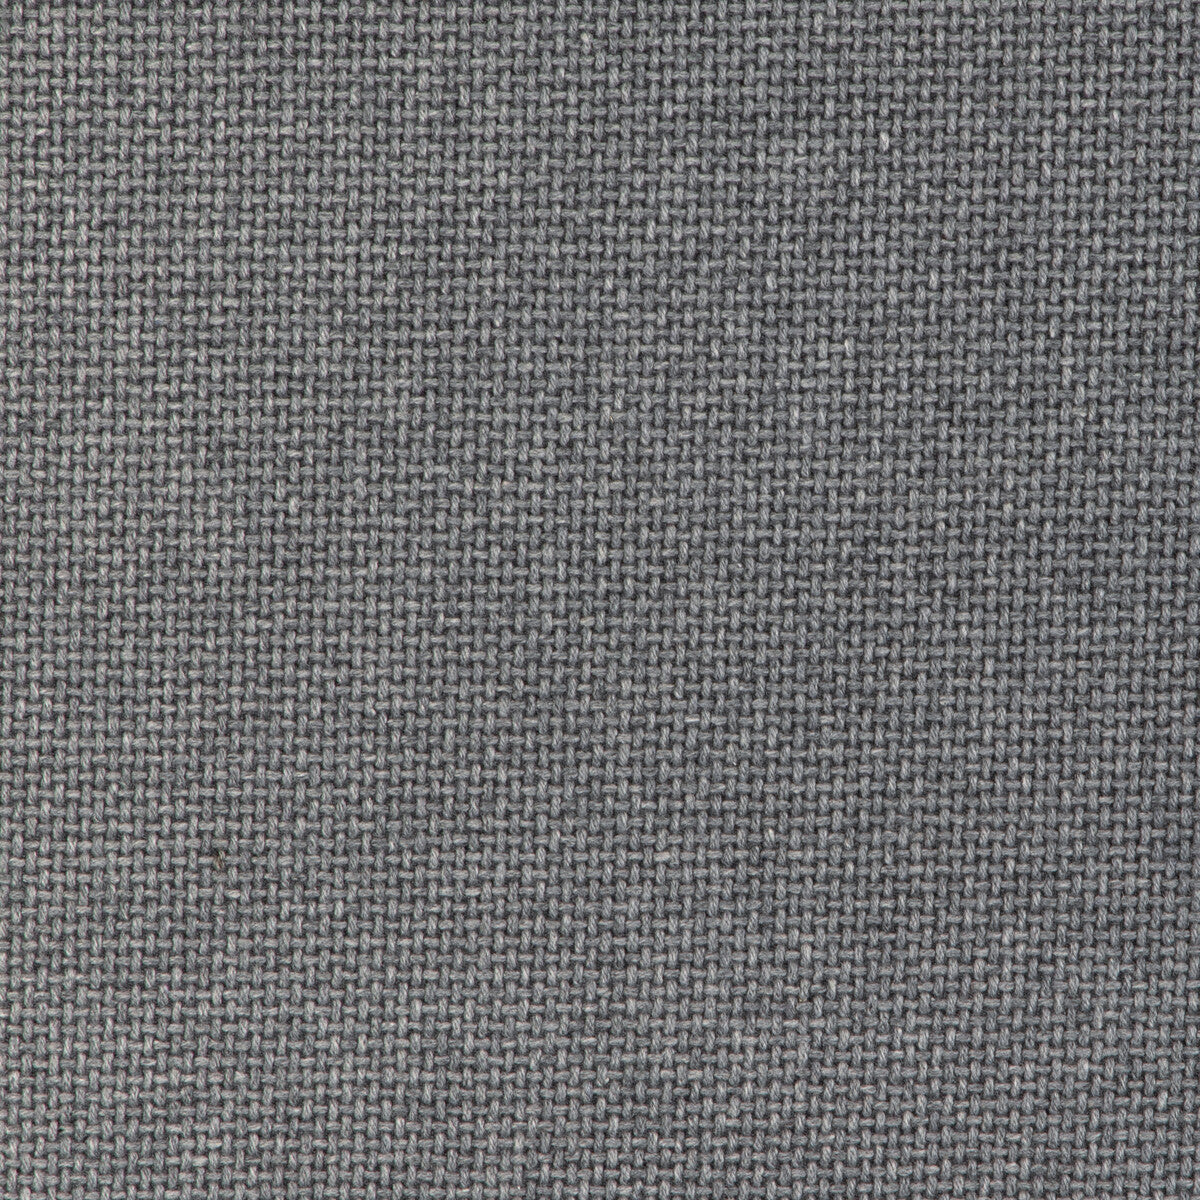 Easton Wool fabric in koala color - pattern 37027.1121.0 - by Kravet Contract